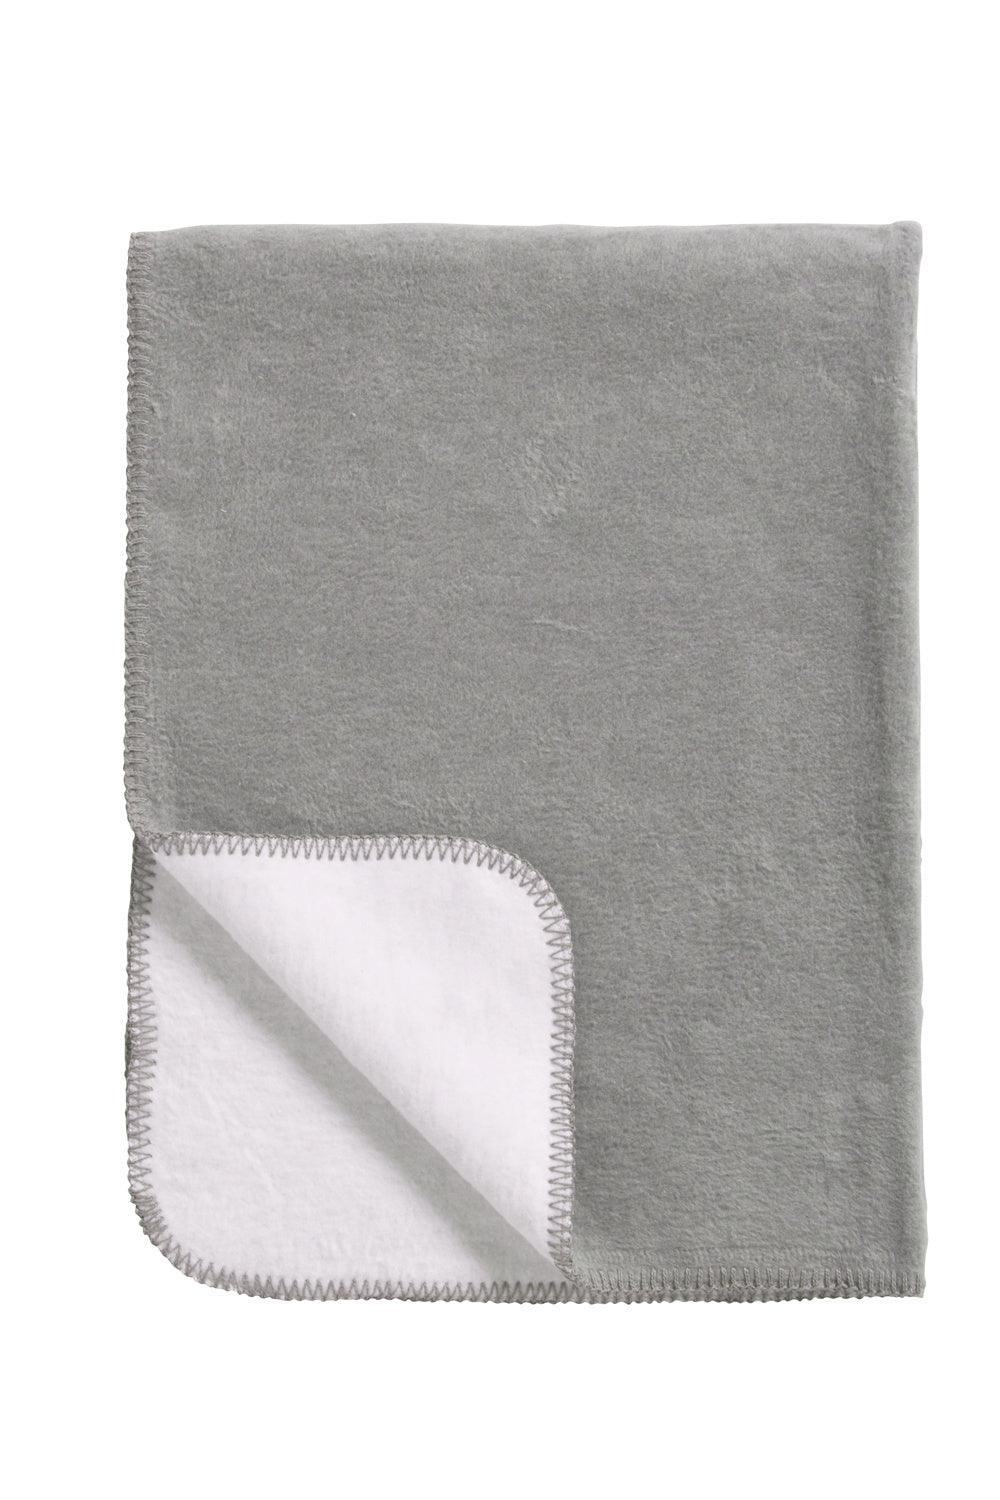 Cot Bed Blanket - Grey - 100x150cm - Mari Kali Stores Cyprus